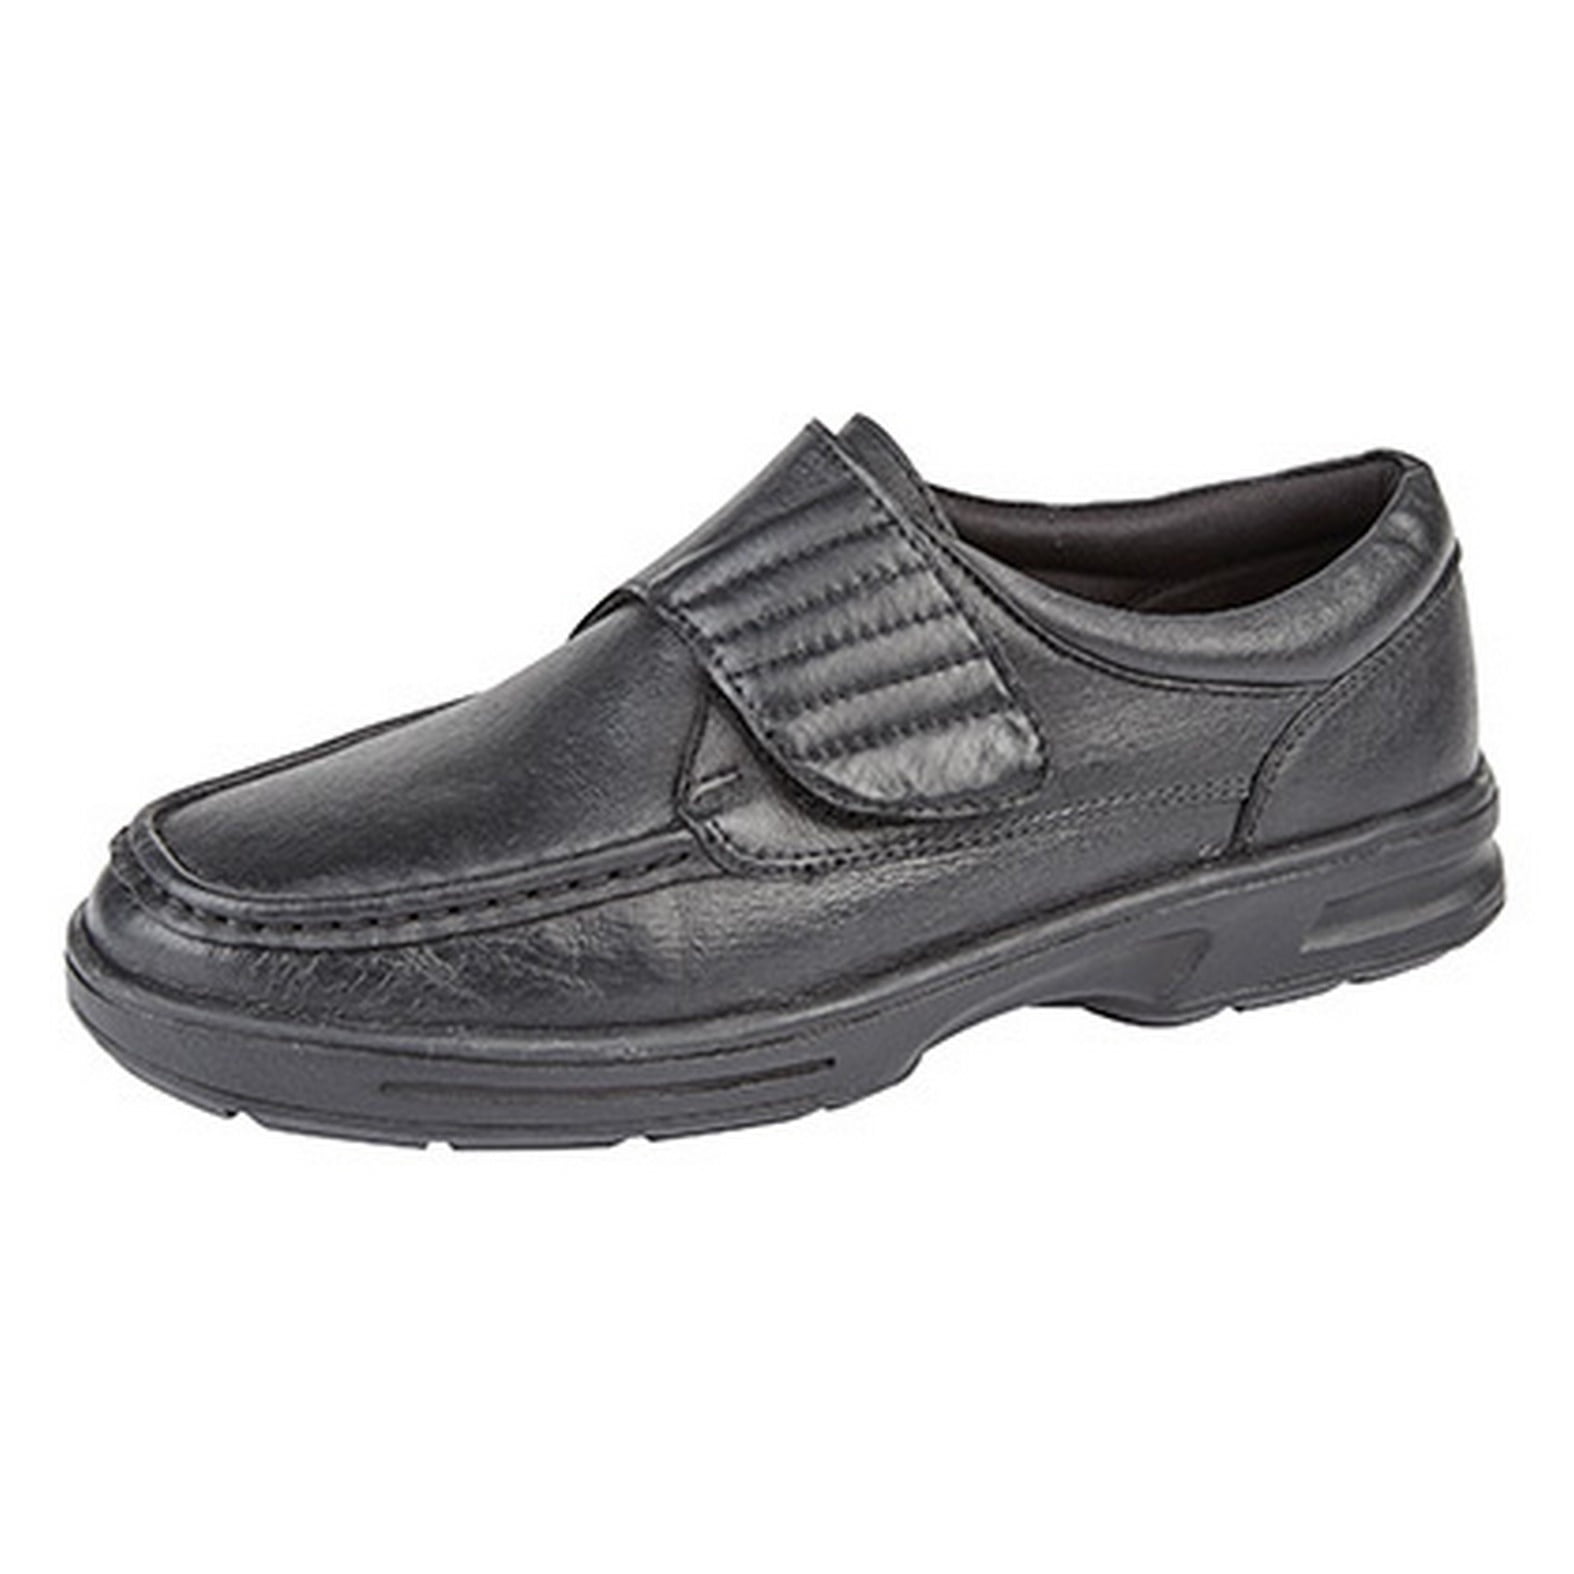 Womens Dr Keller Black Leather Work Office Comfort Casual Slip On Shoes UK 4-8 